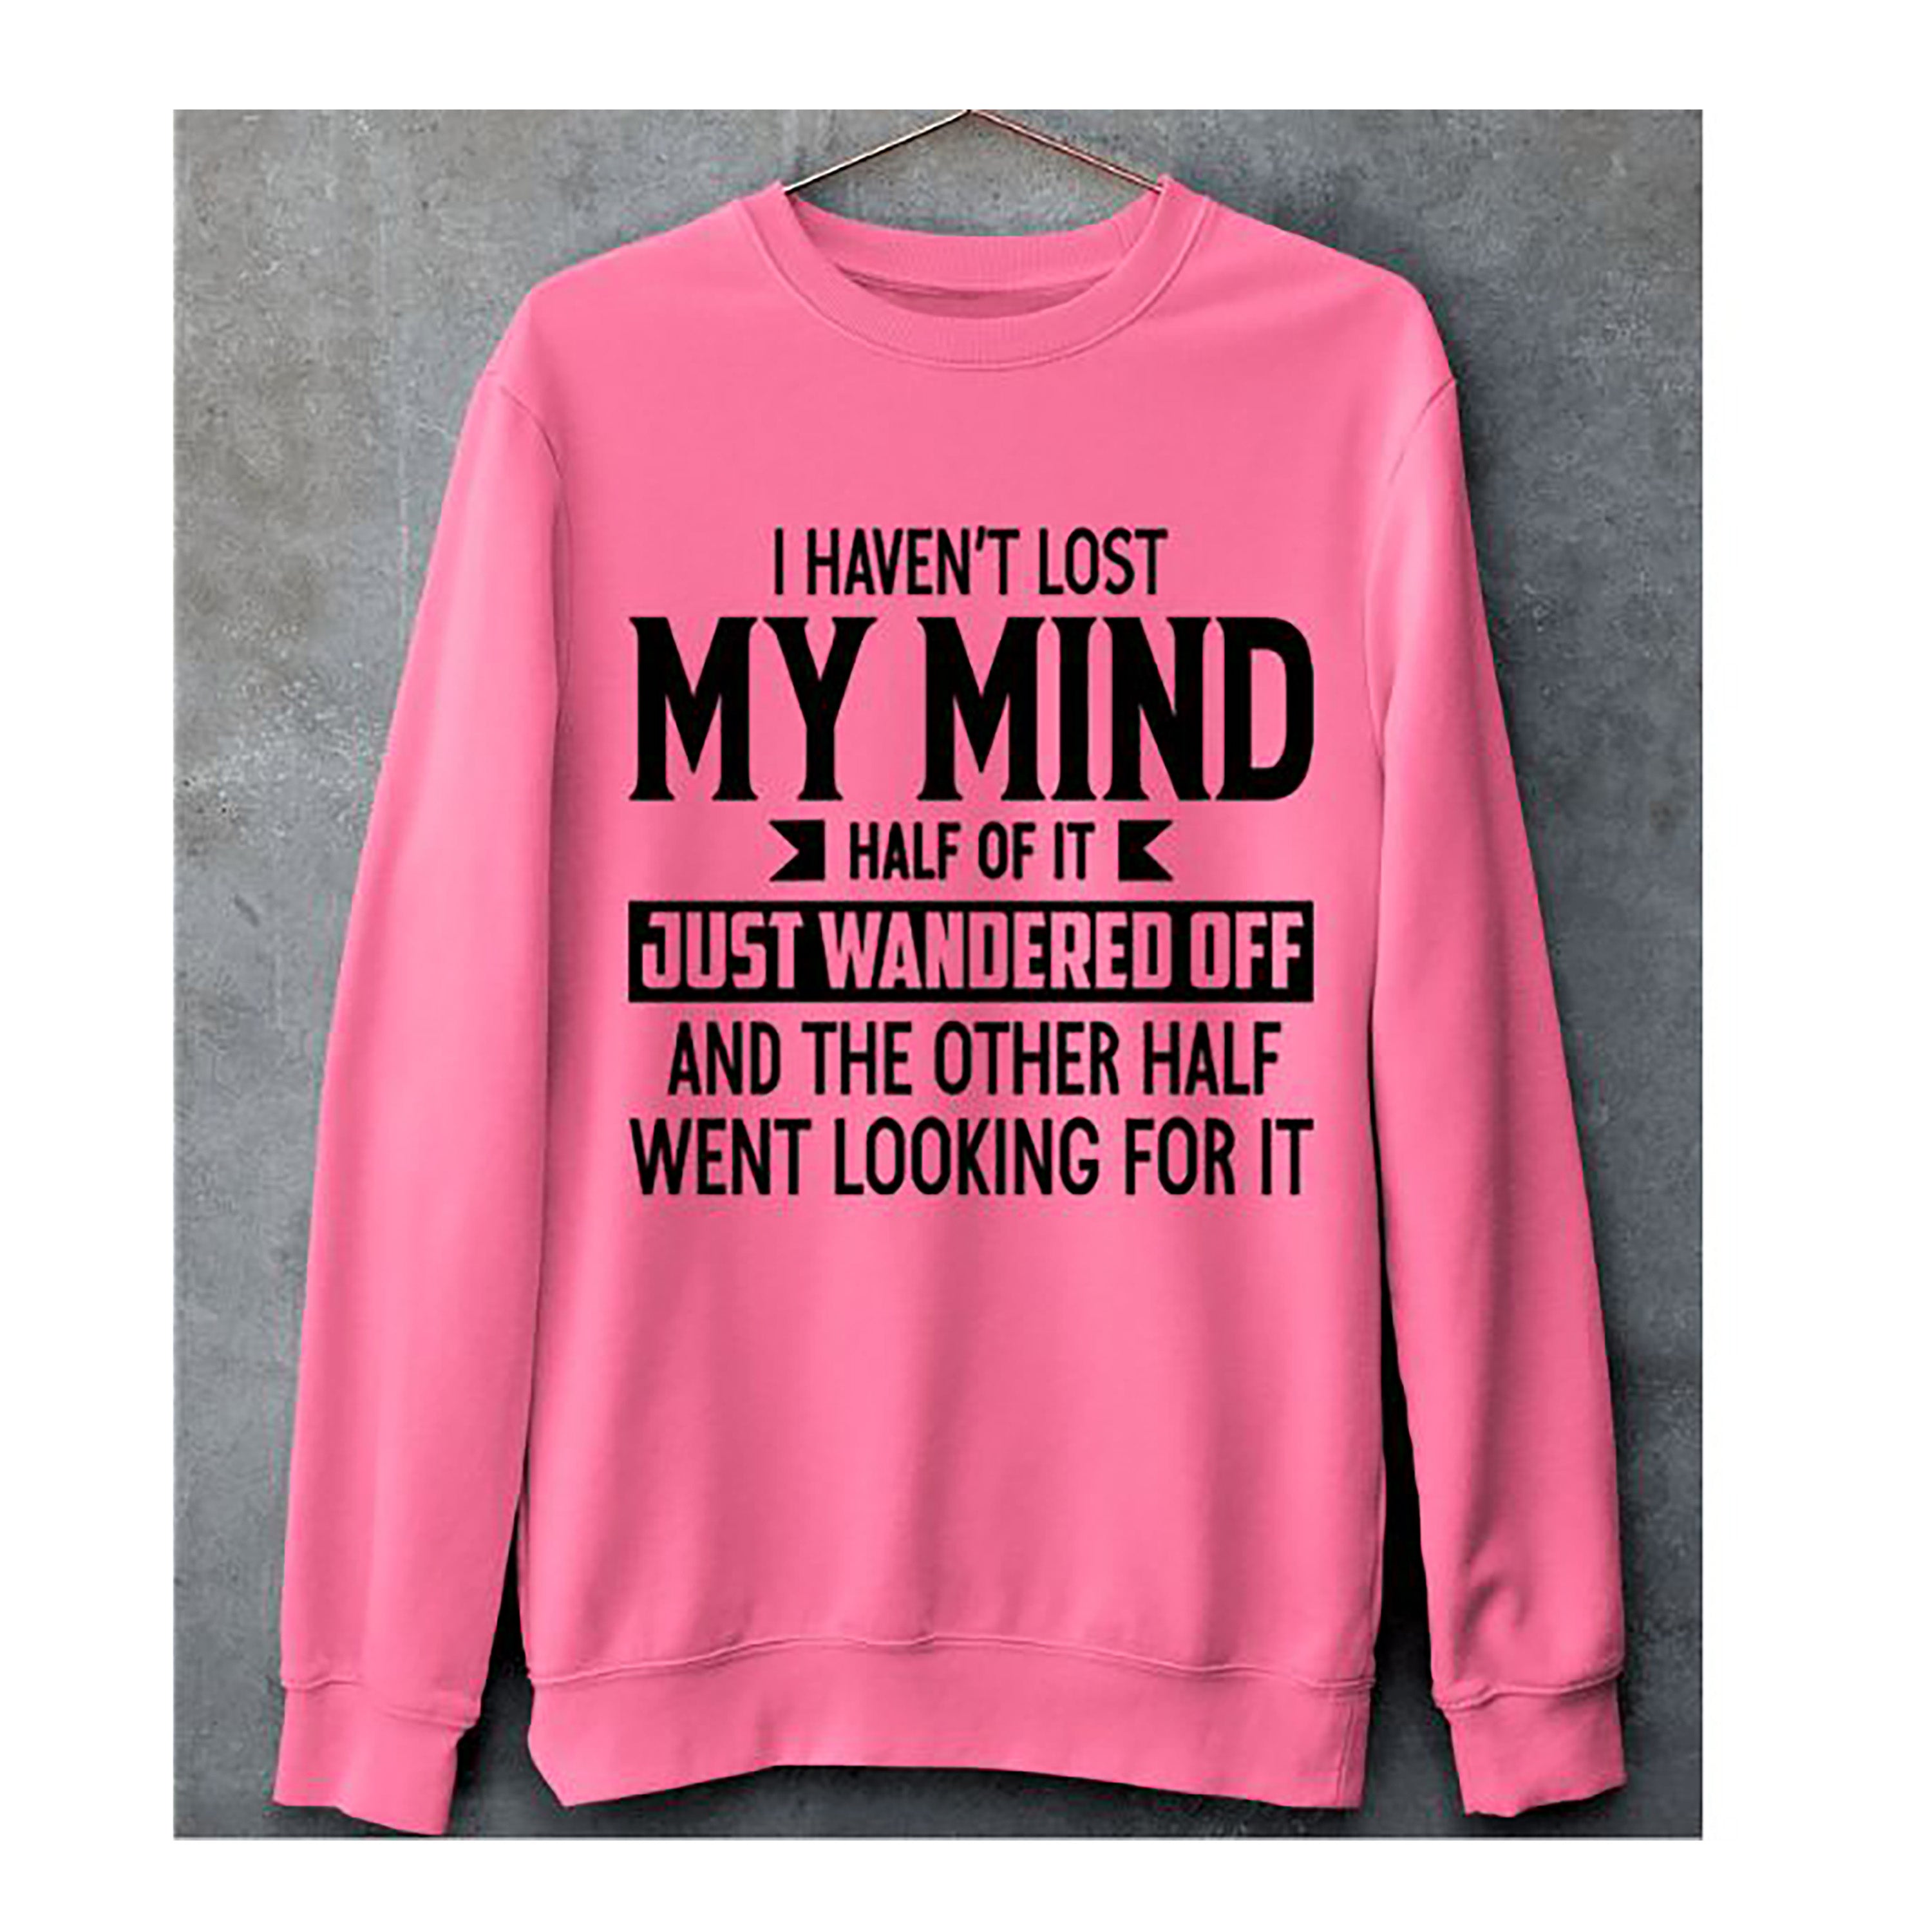 "I HAVEN'T LOST MY MIND"- Hoodie & Sweatshirt.